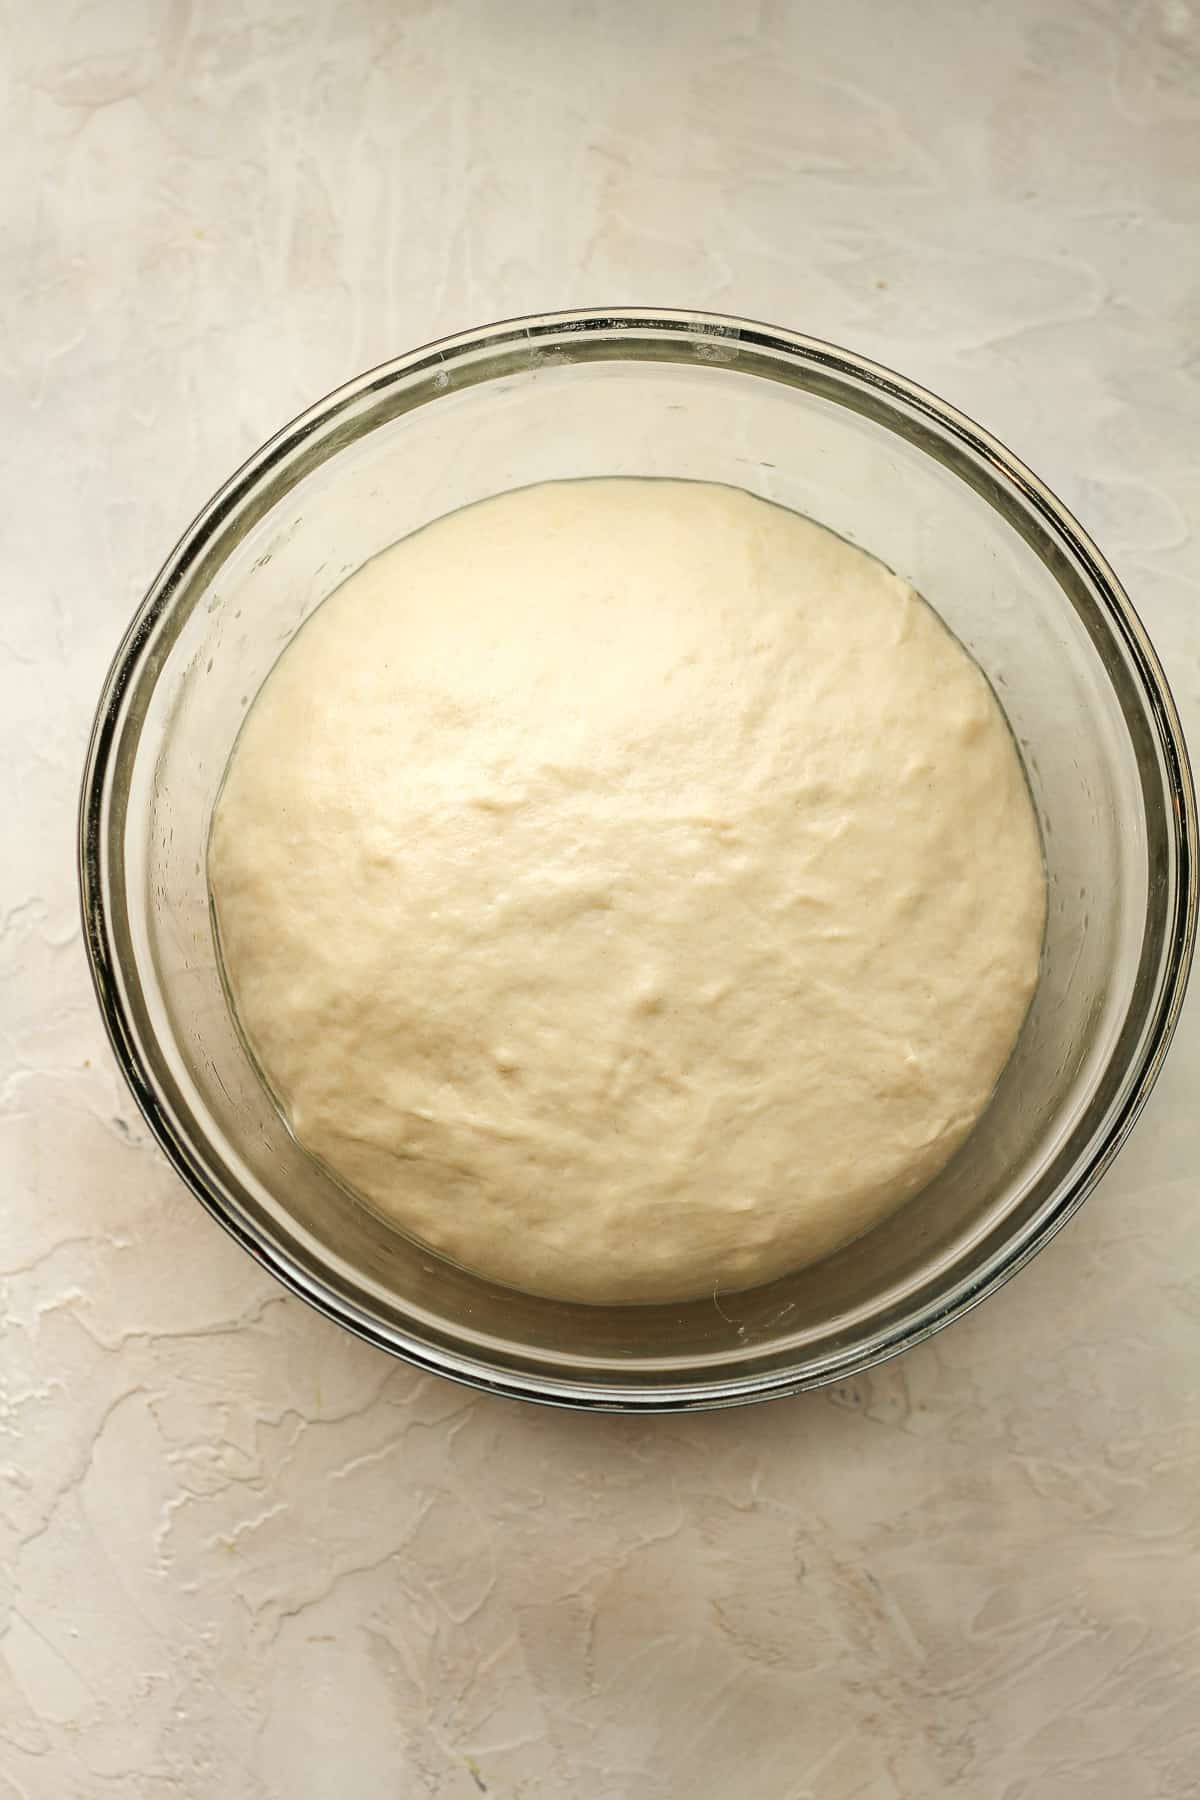 A bowl of bagel dough.